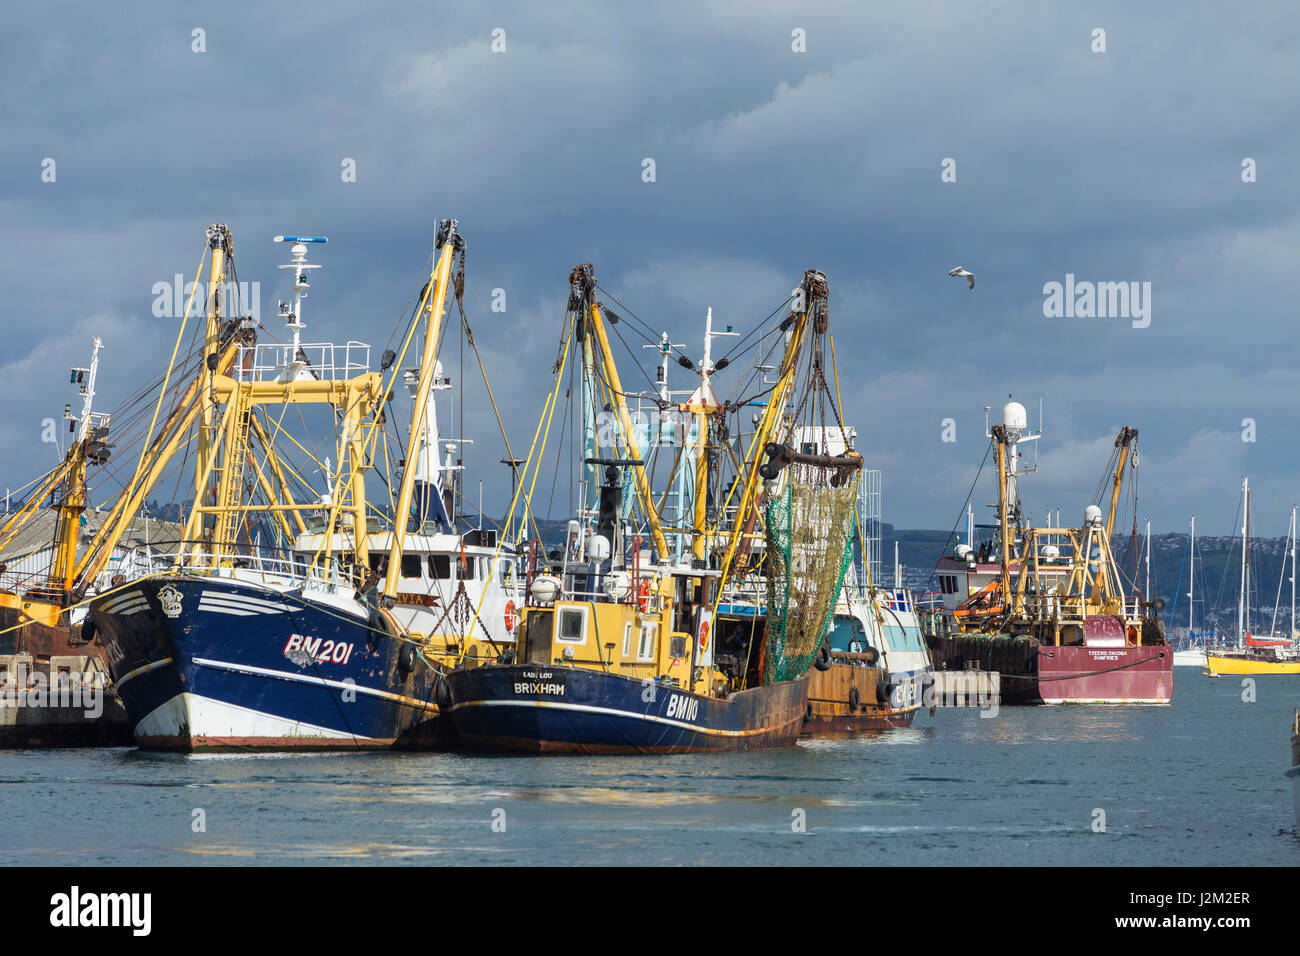 Fishing boats moored in Brixham Harbour, Devon, UK Stock Photo